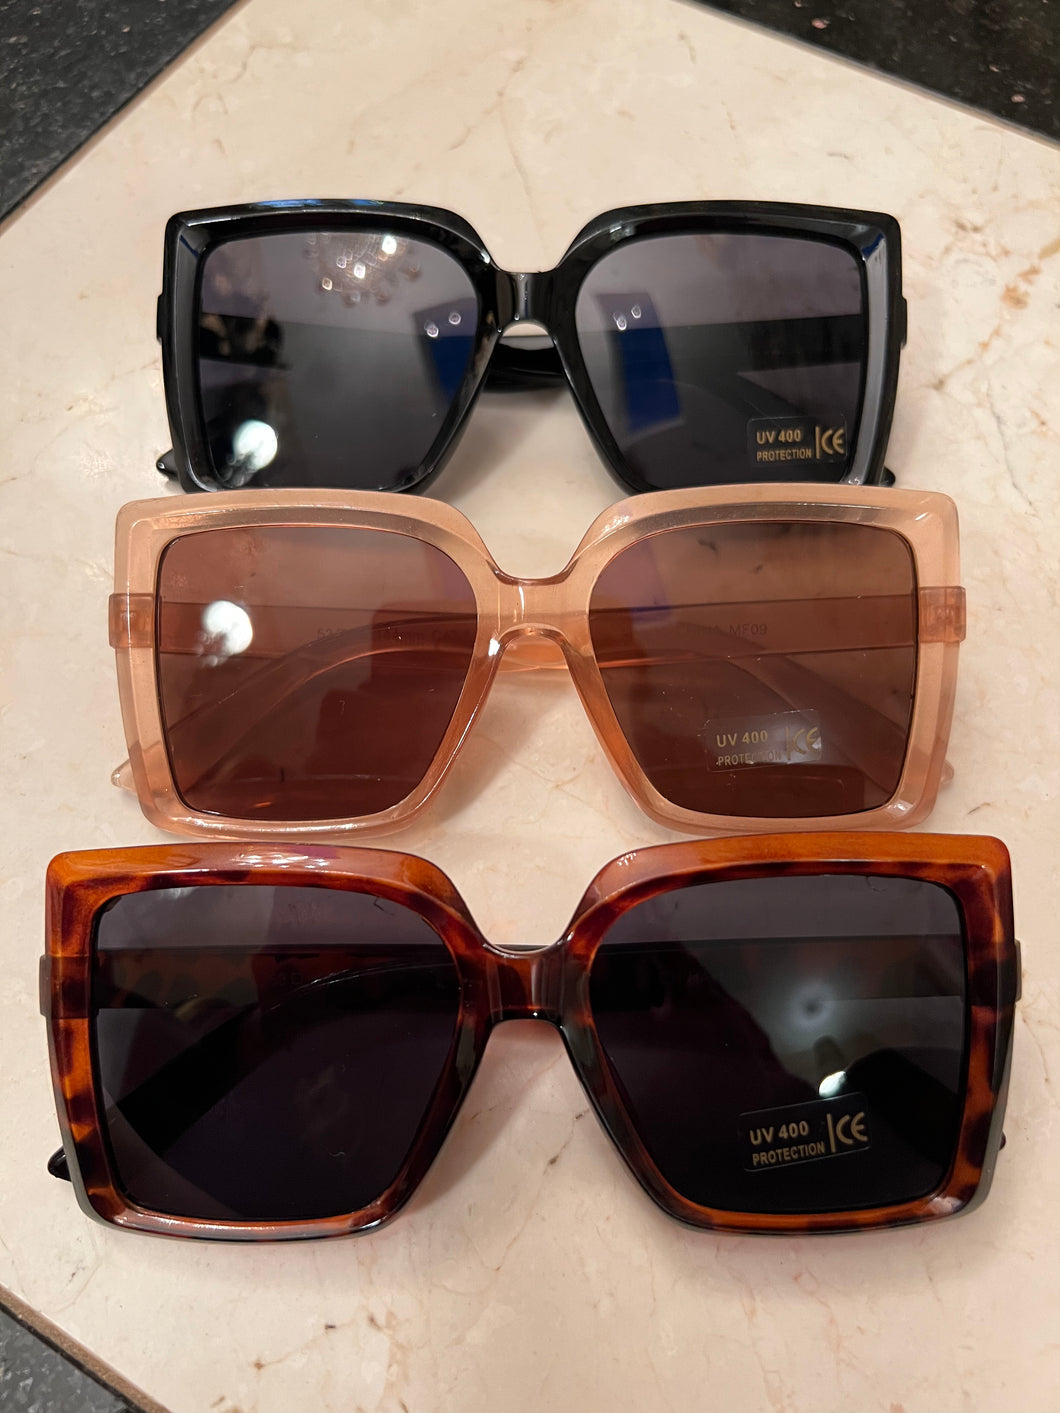 Square Fashion Sunglasses